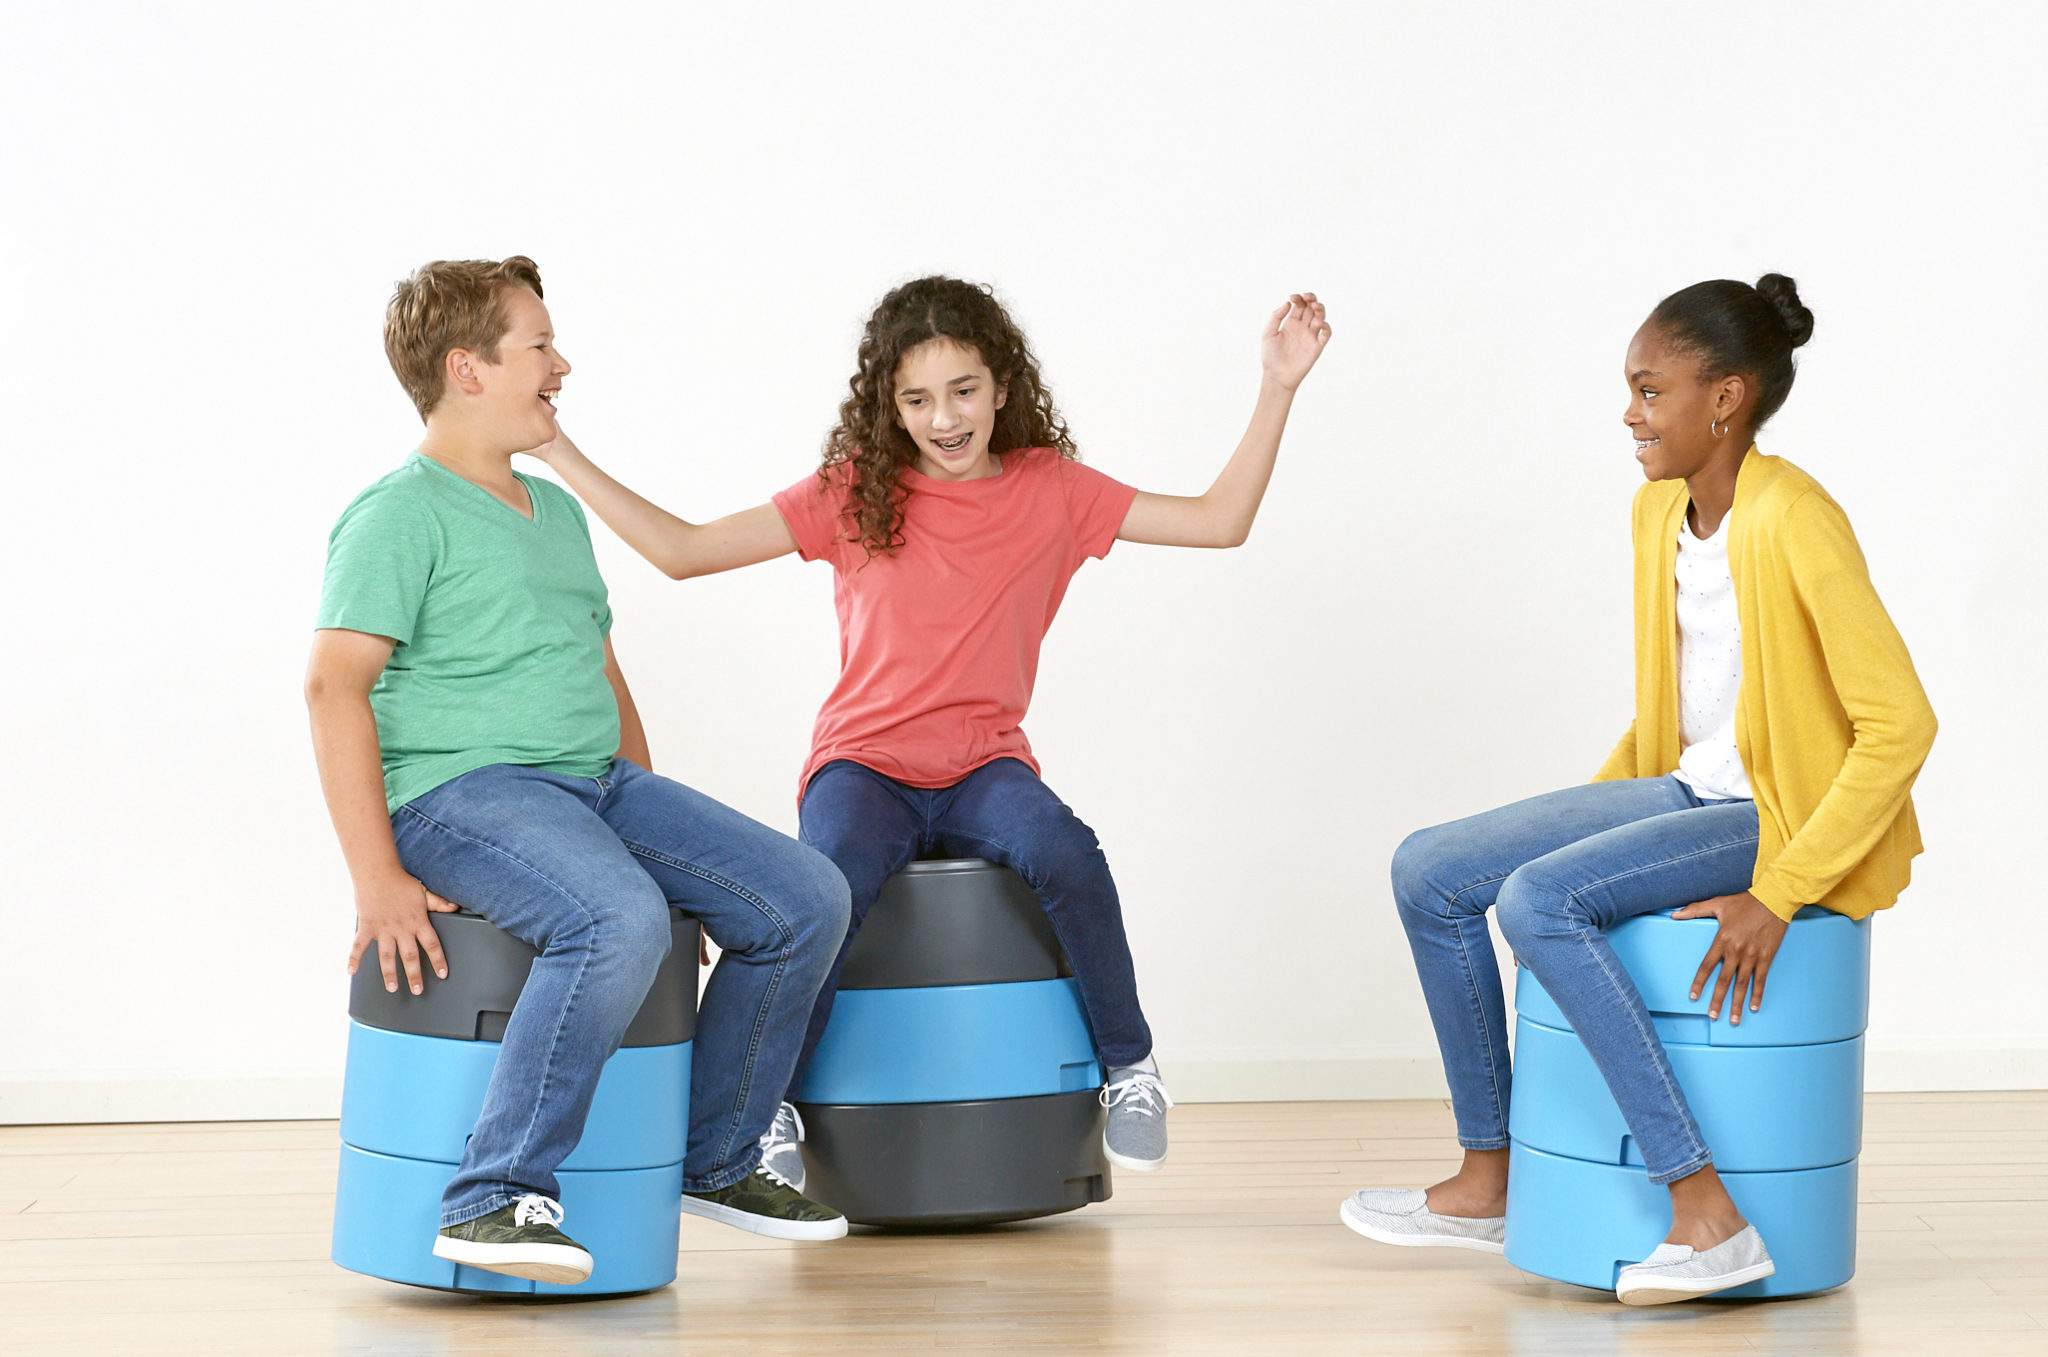 A photograph of 3 children having fun on classroom stools